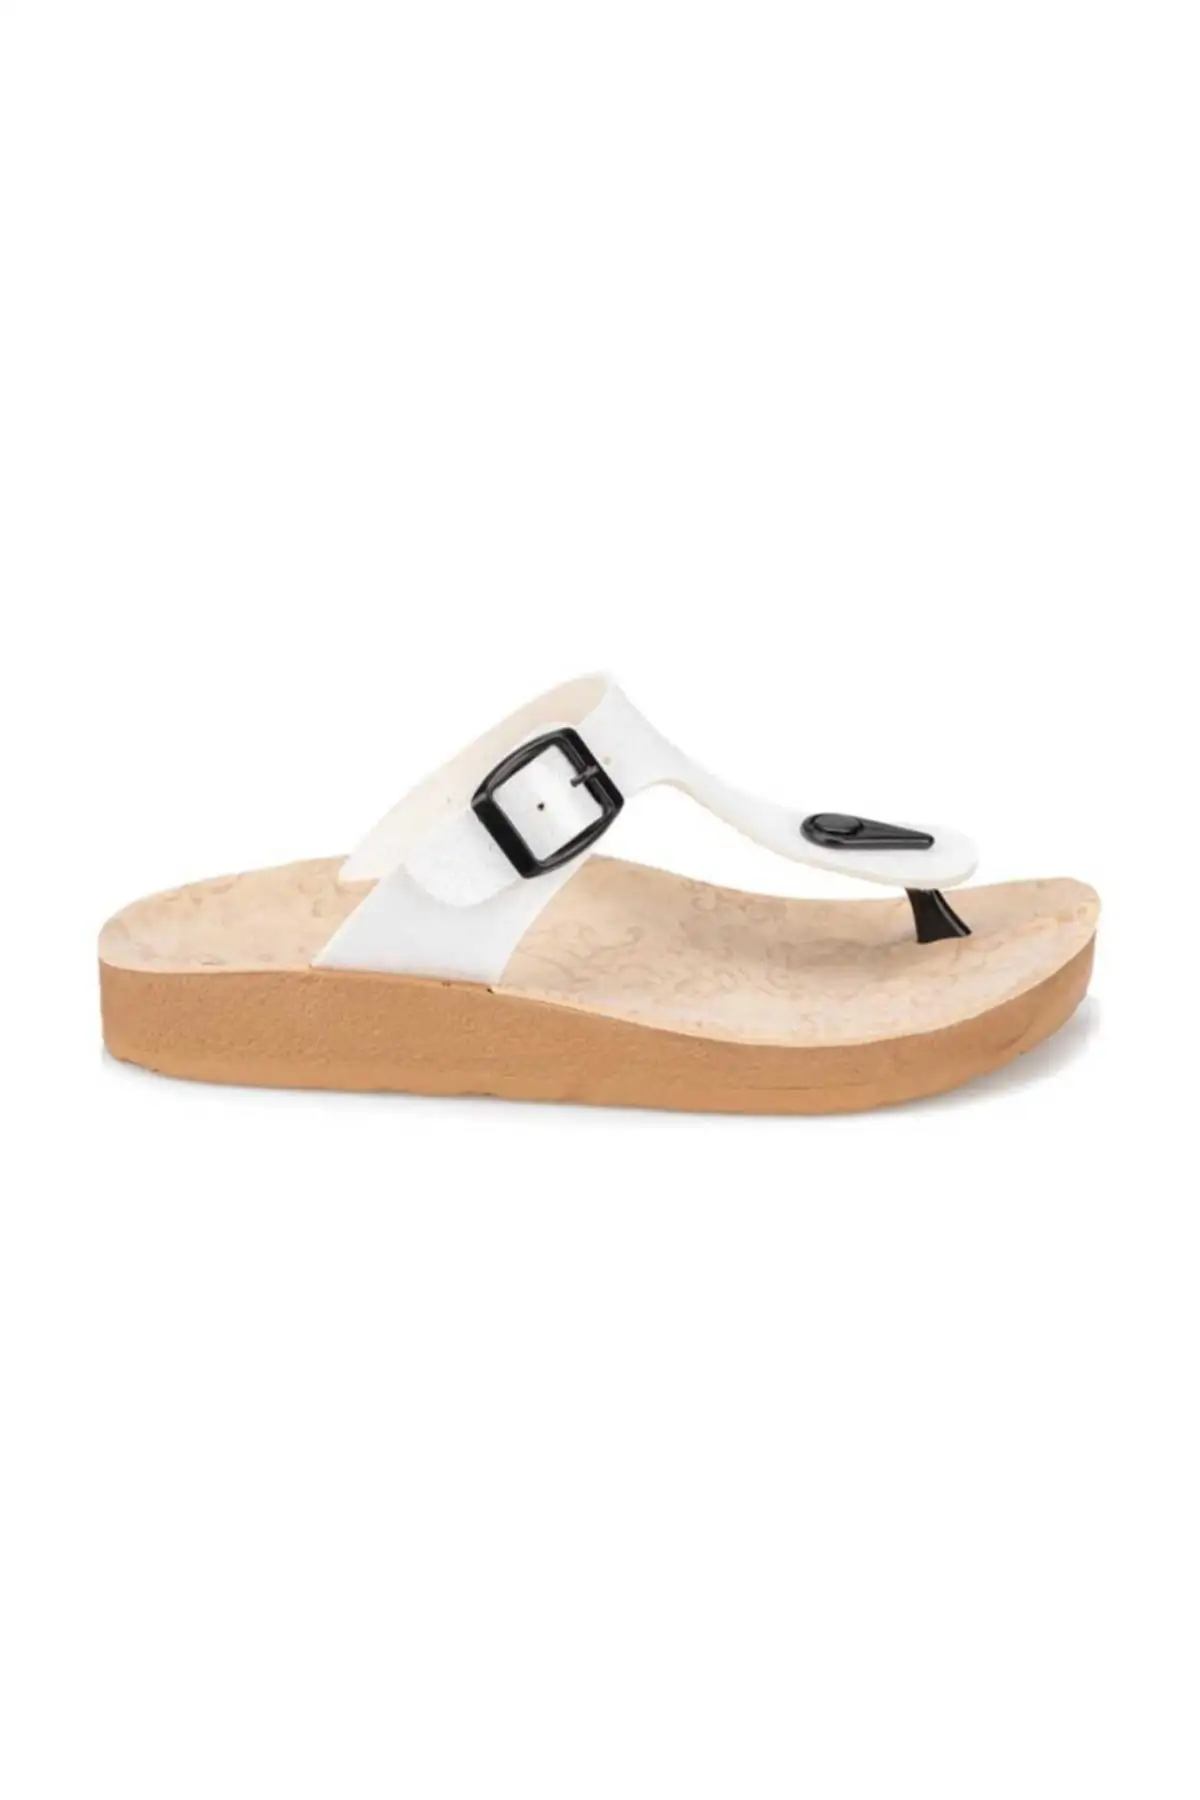 

Women Sandals. Sz white female Fashion Summer Slipper Indoor Outdoor Flip Flops Beach Shoes Female Slippers Platform Casual